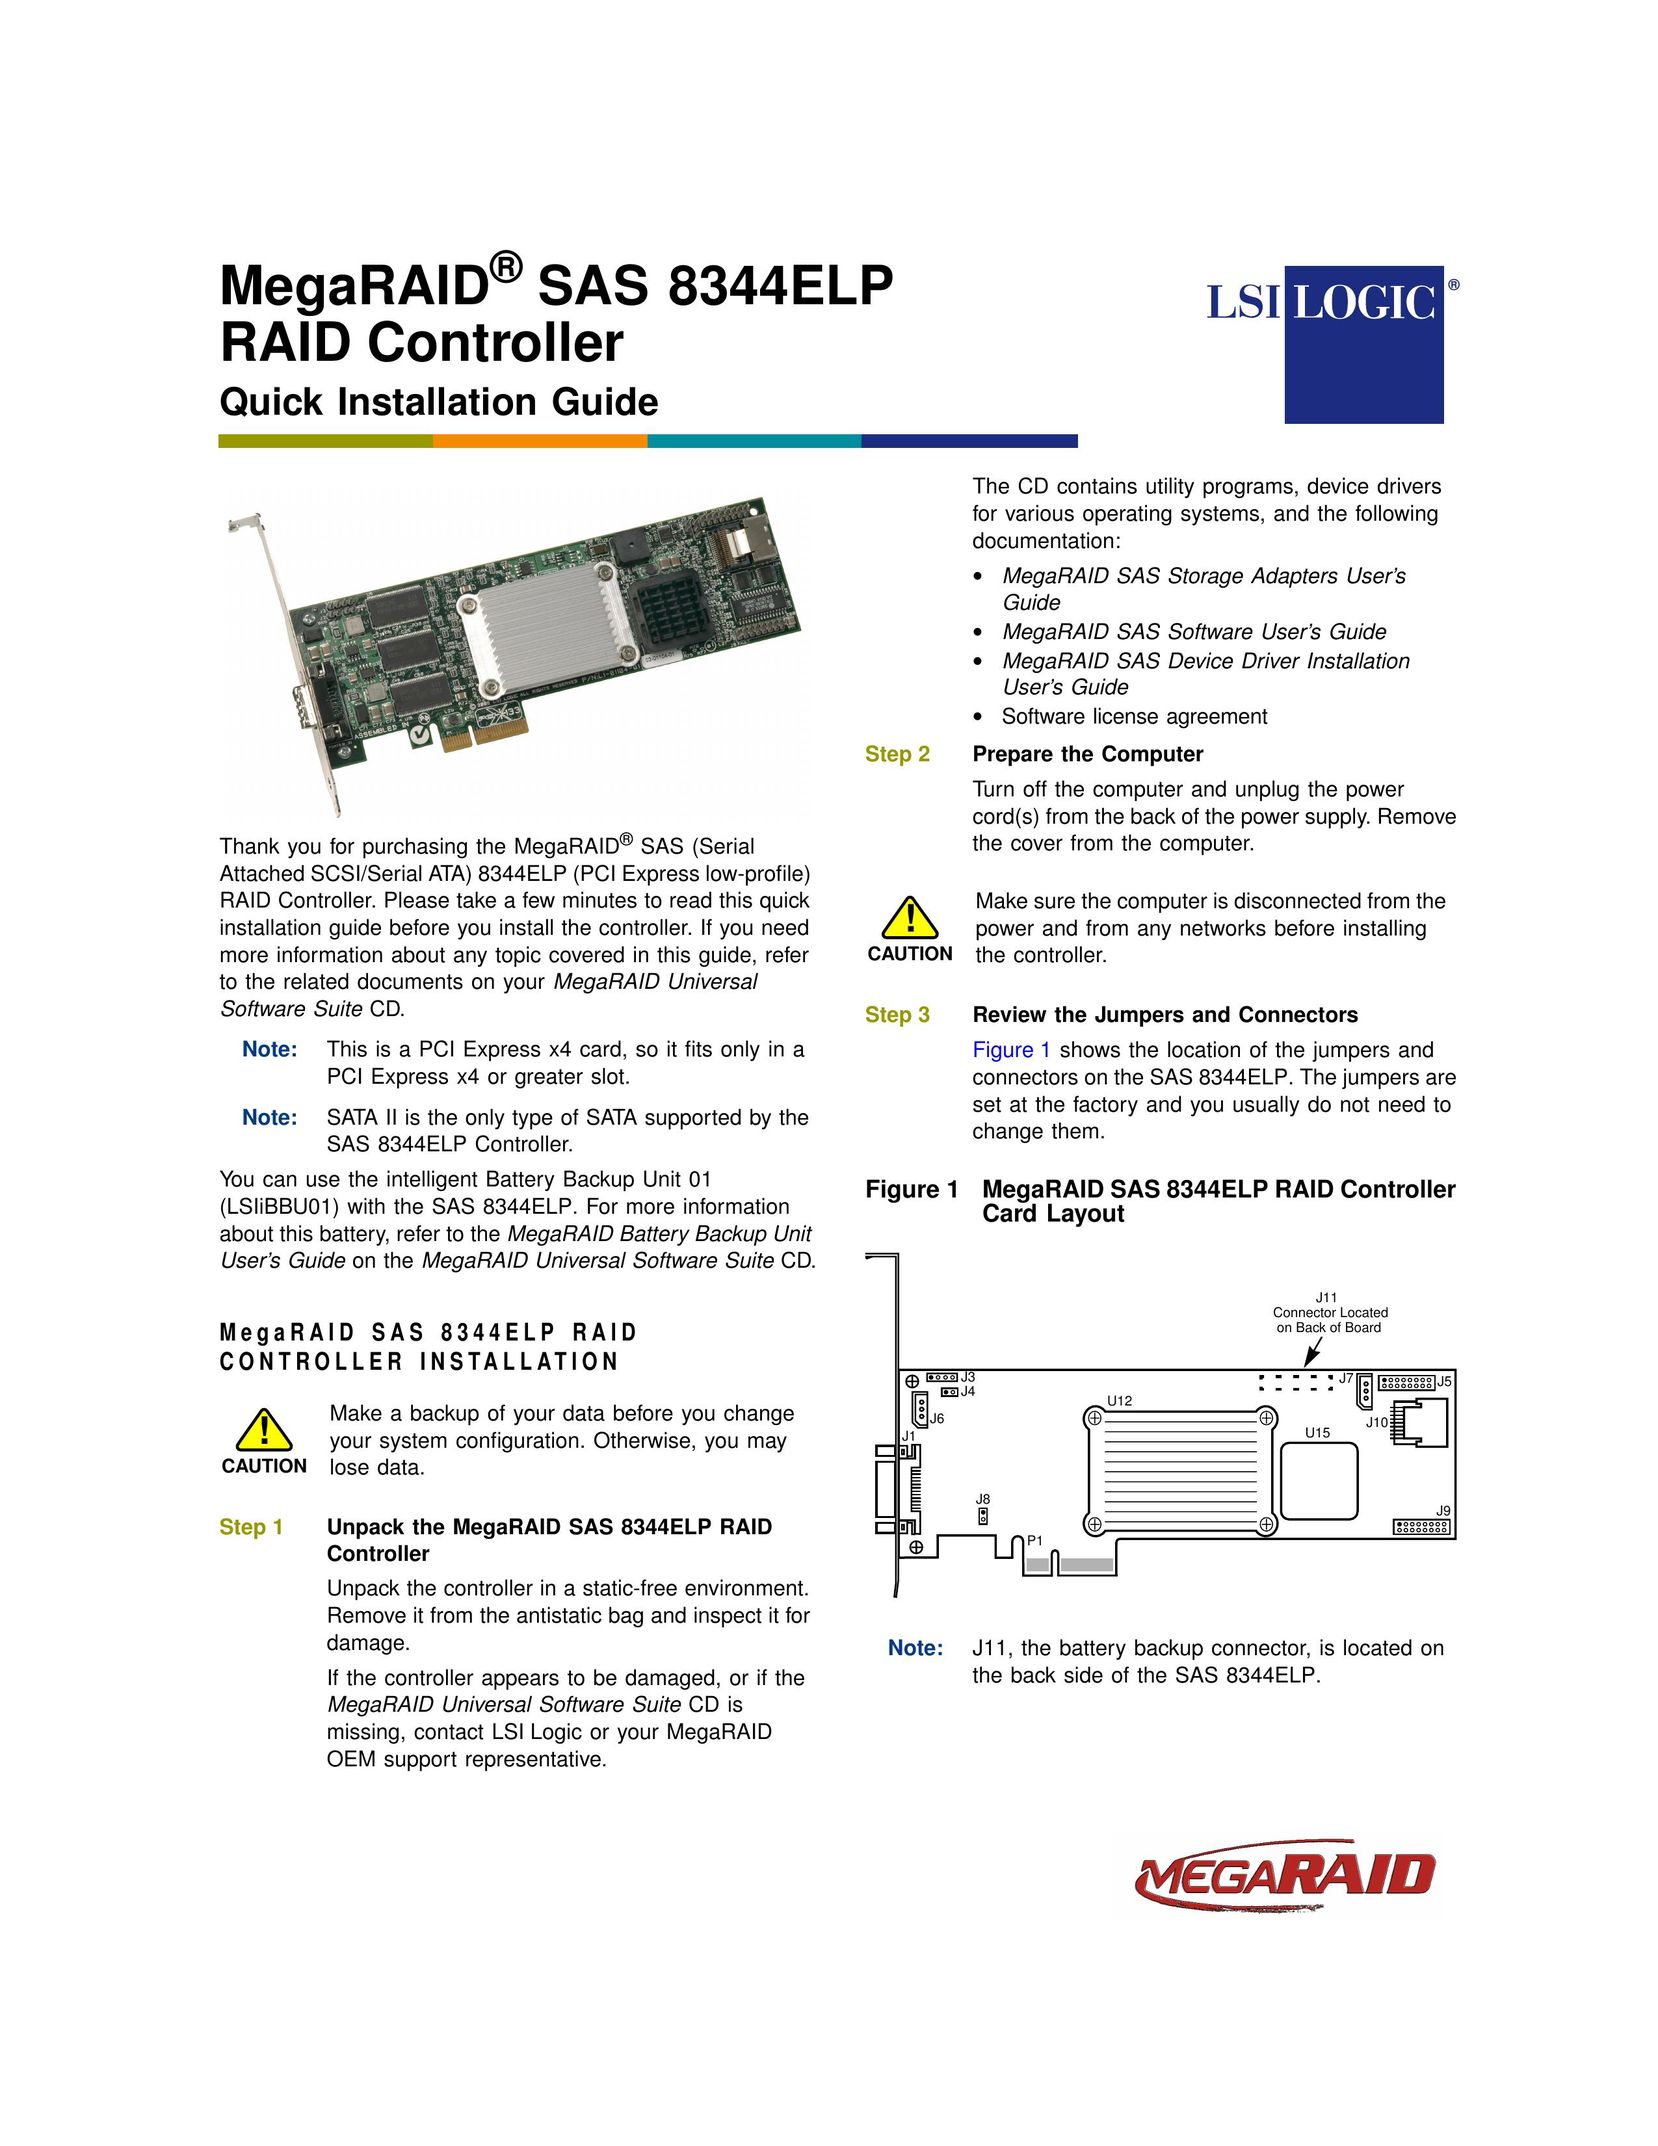 LSI 8344ELP Computer Hardware User Manual